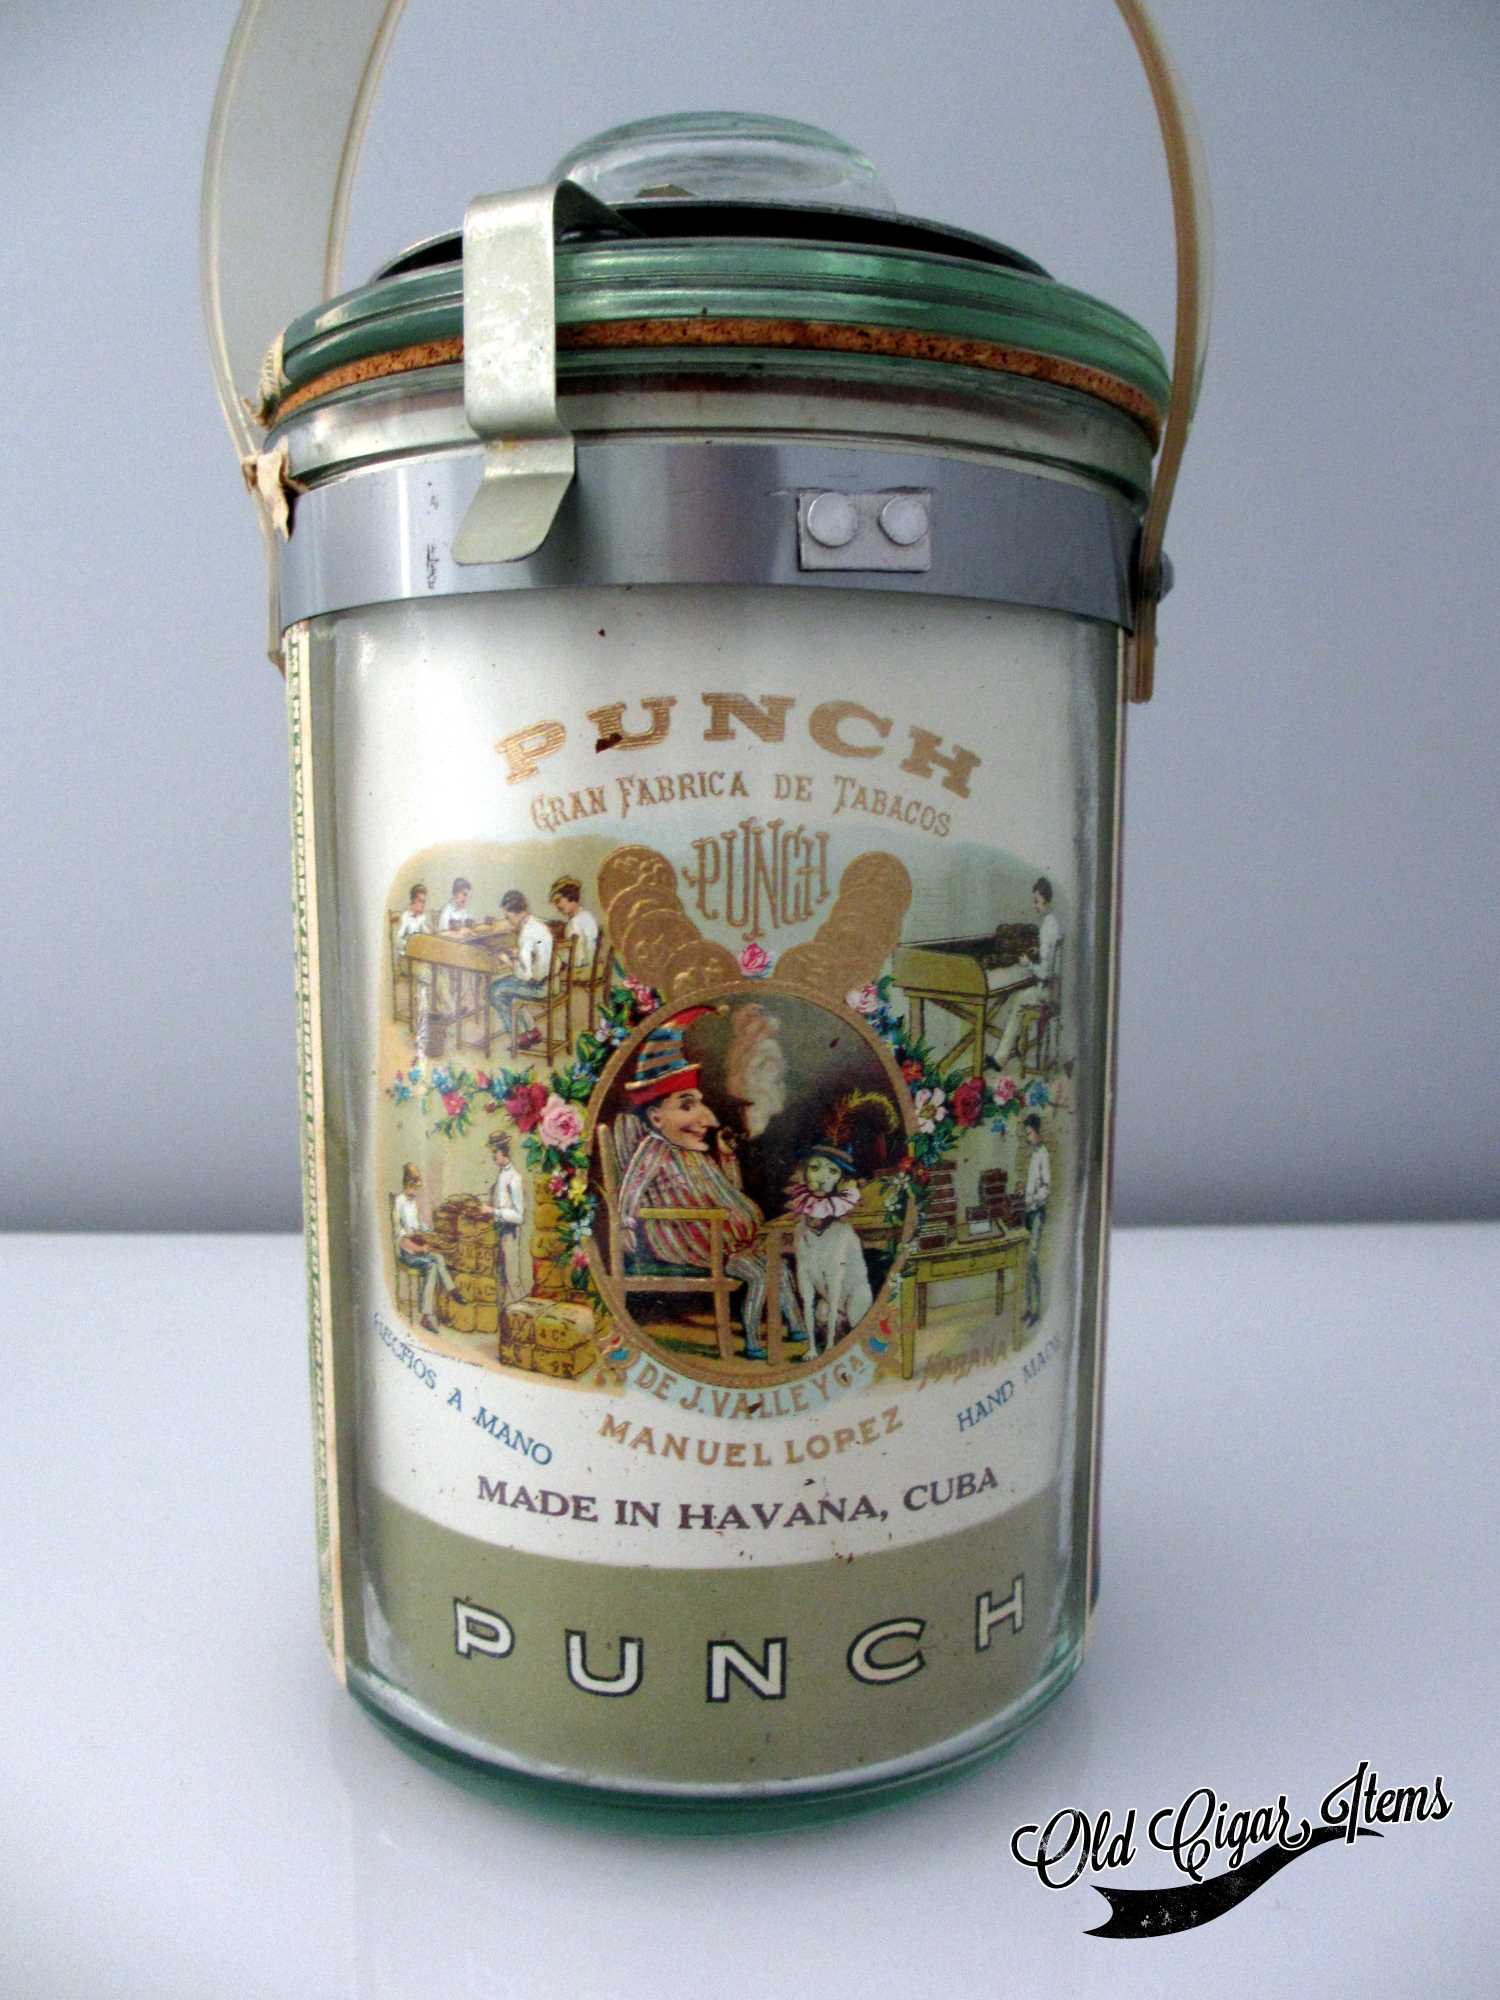 Punch Presidentes glass jar